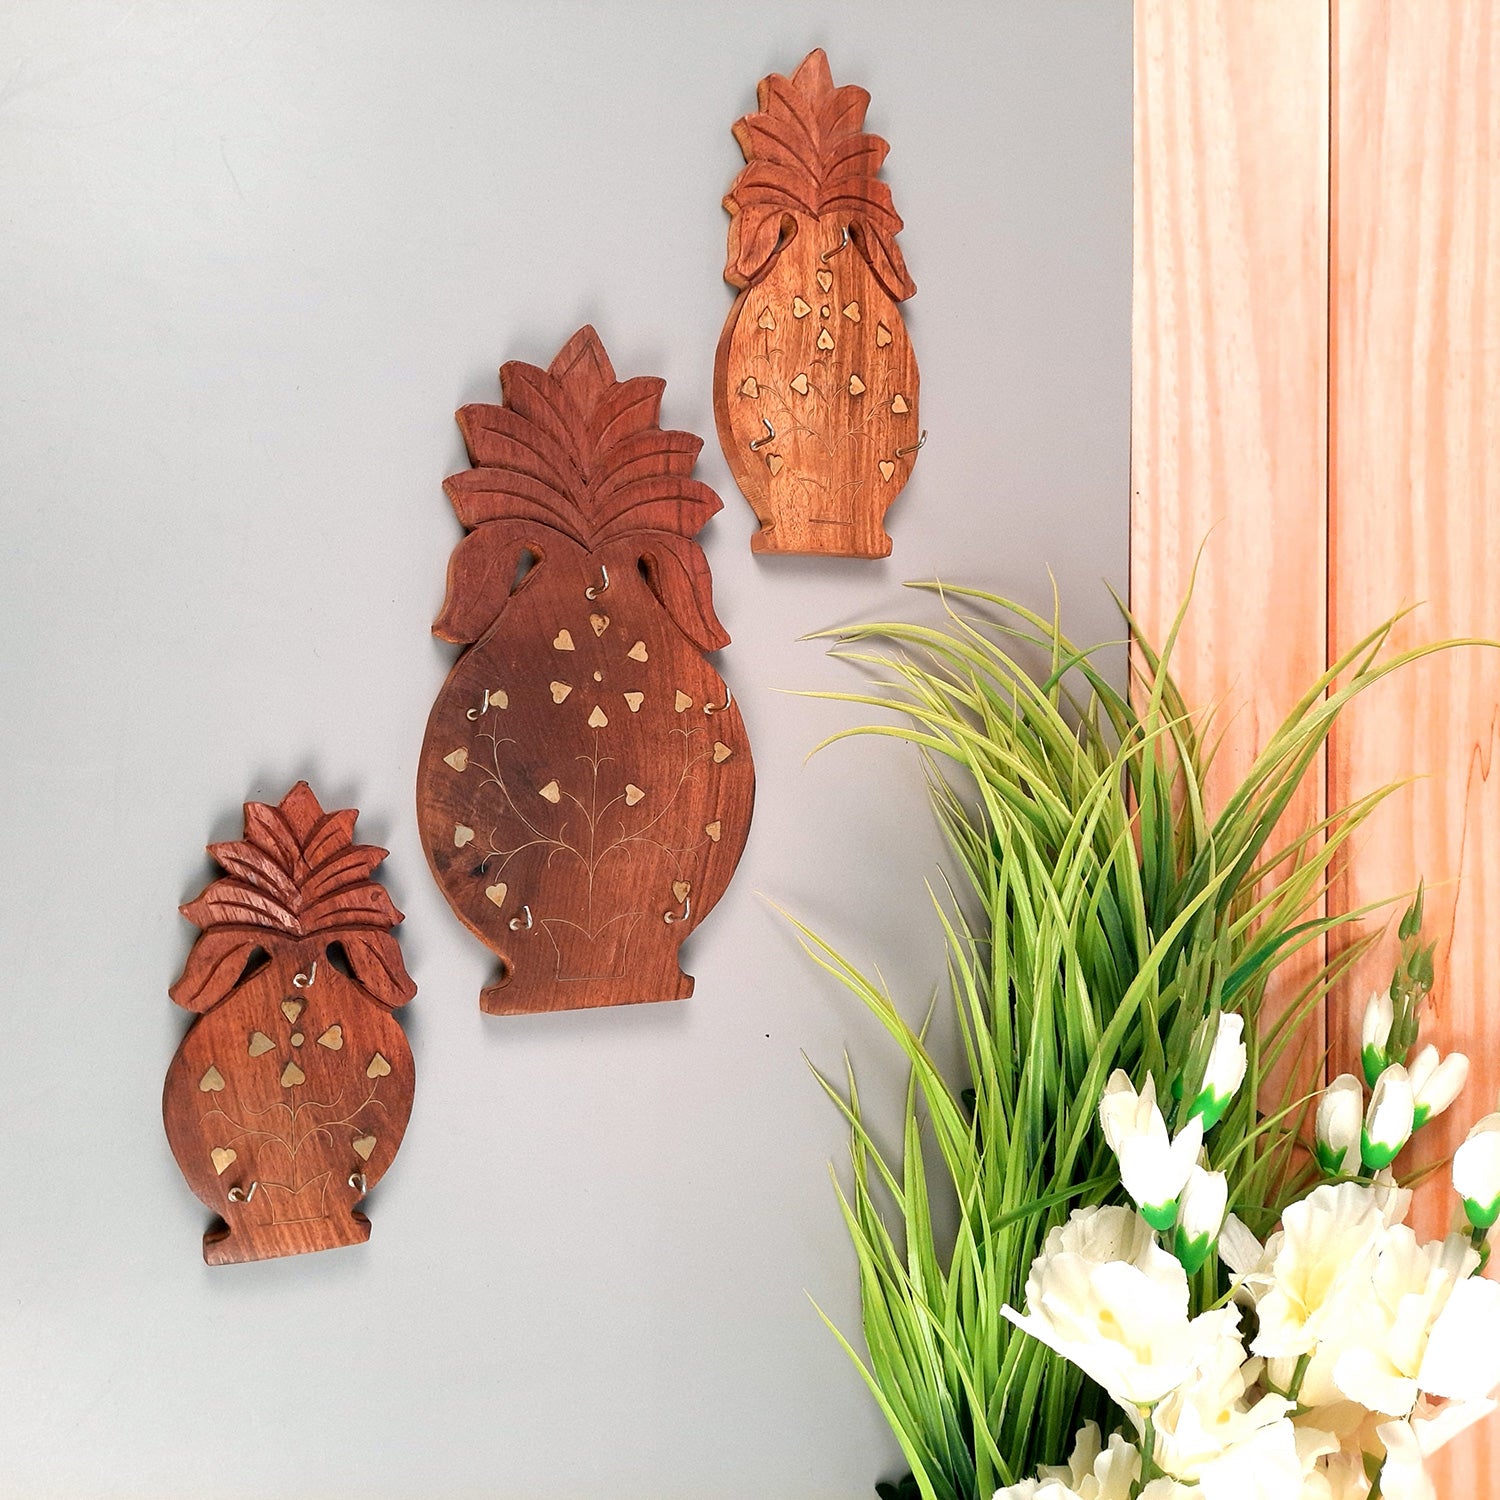 Key Holder Wall Hanging | Key Hook Stand - Pineapple Design | Wooden Keys Organizer - For Home, Entrance, Office Decor & Gifts - (Set of 3) (11 Hooks) - Apkamart